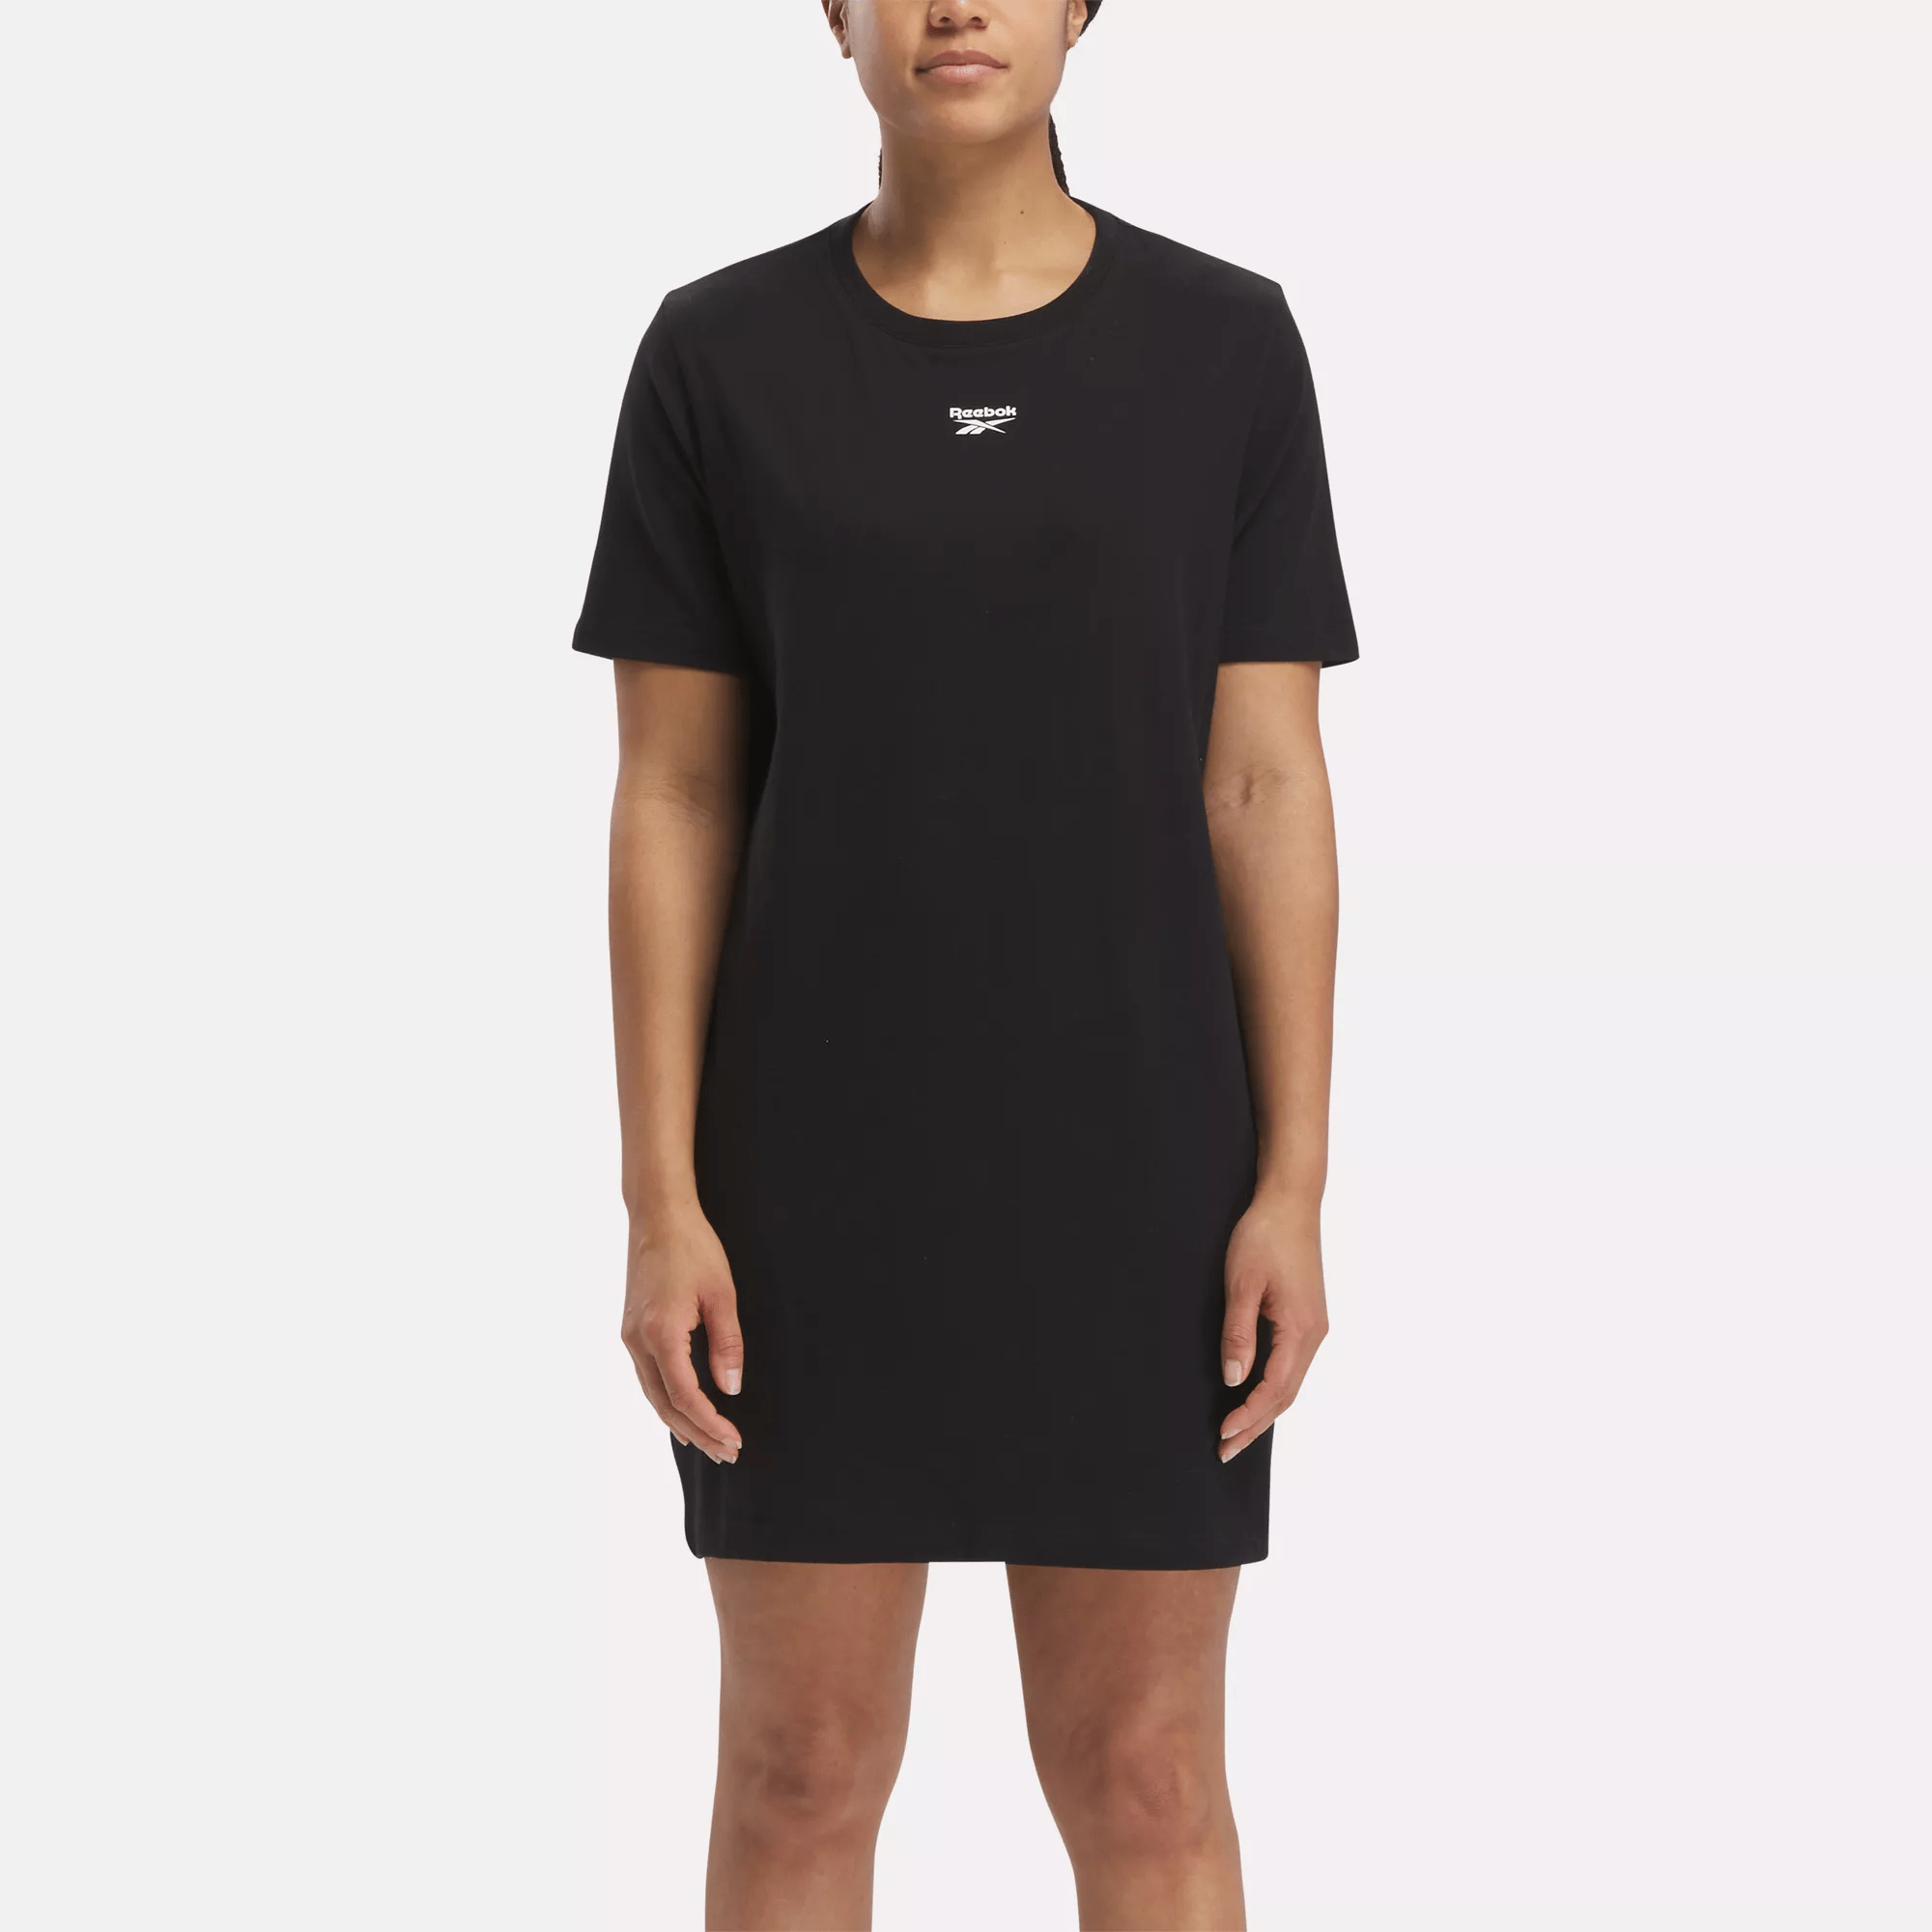 Reebok Identity T-shirt Dress In Black